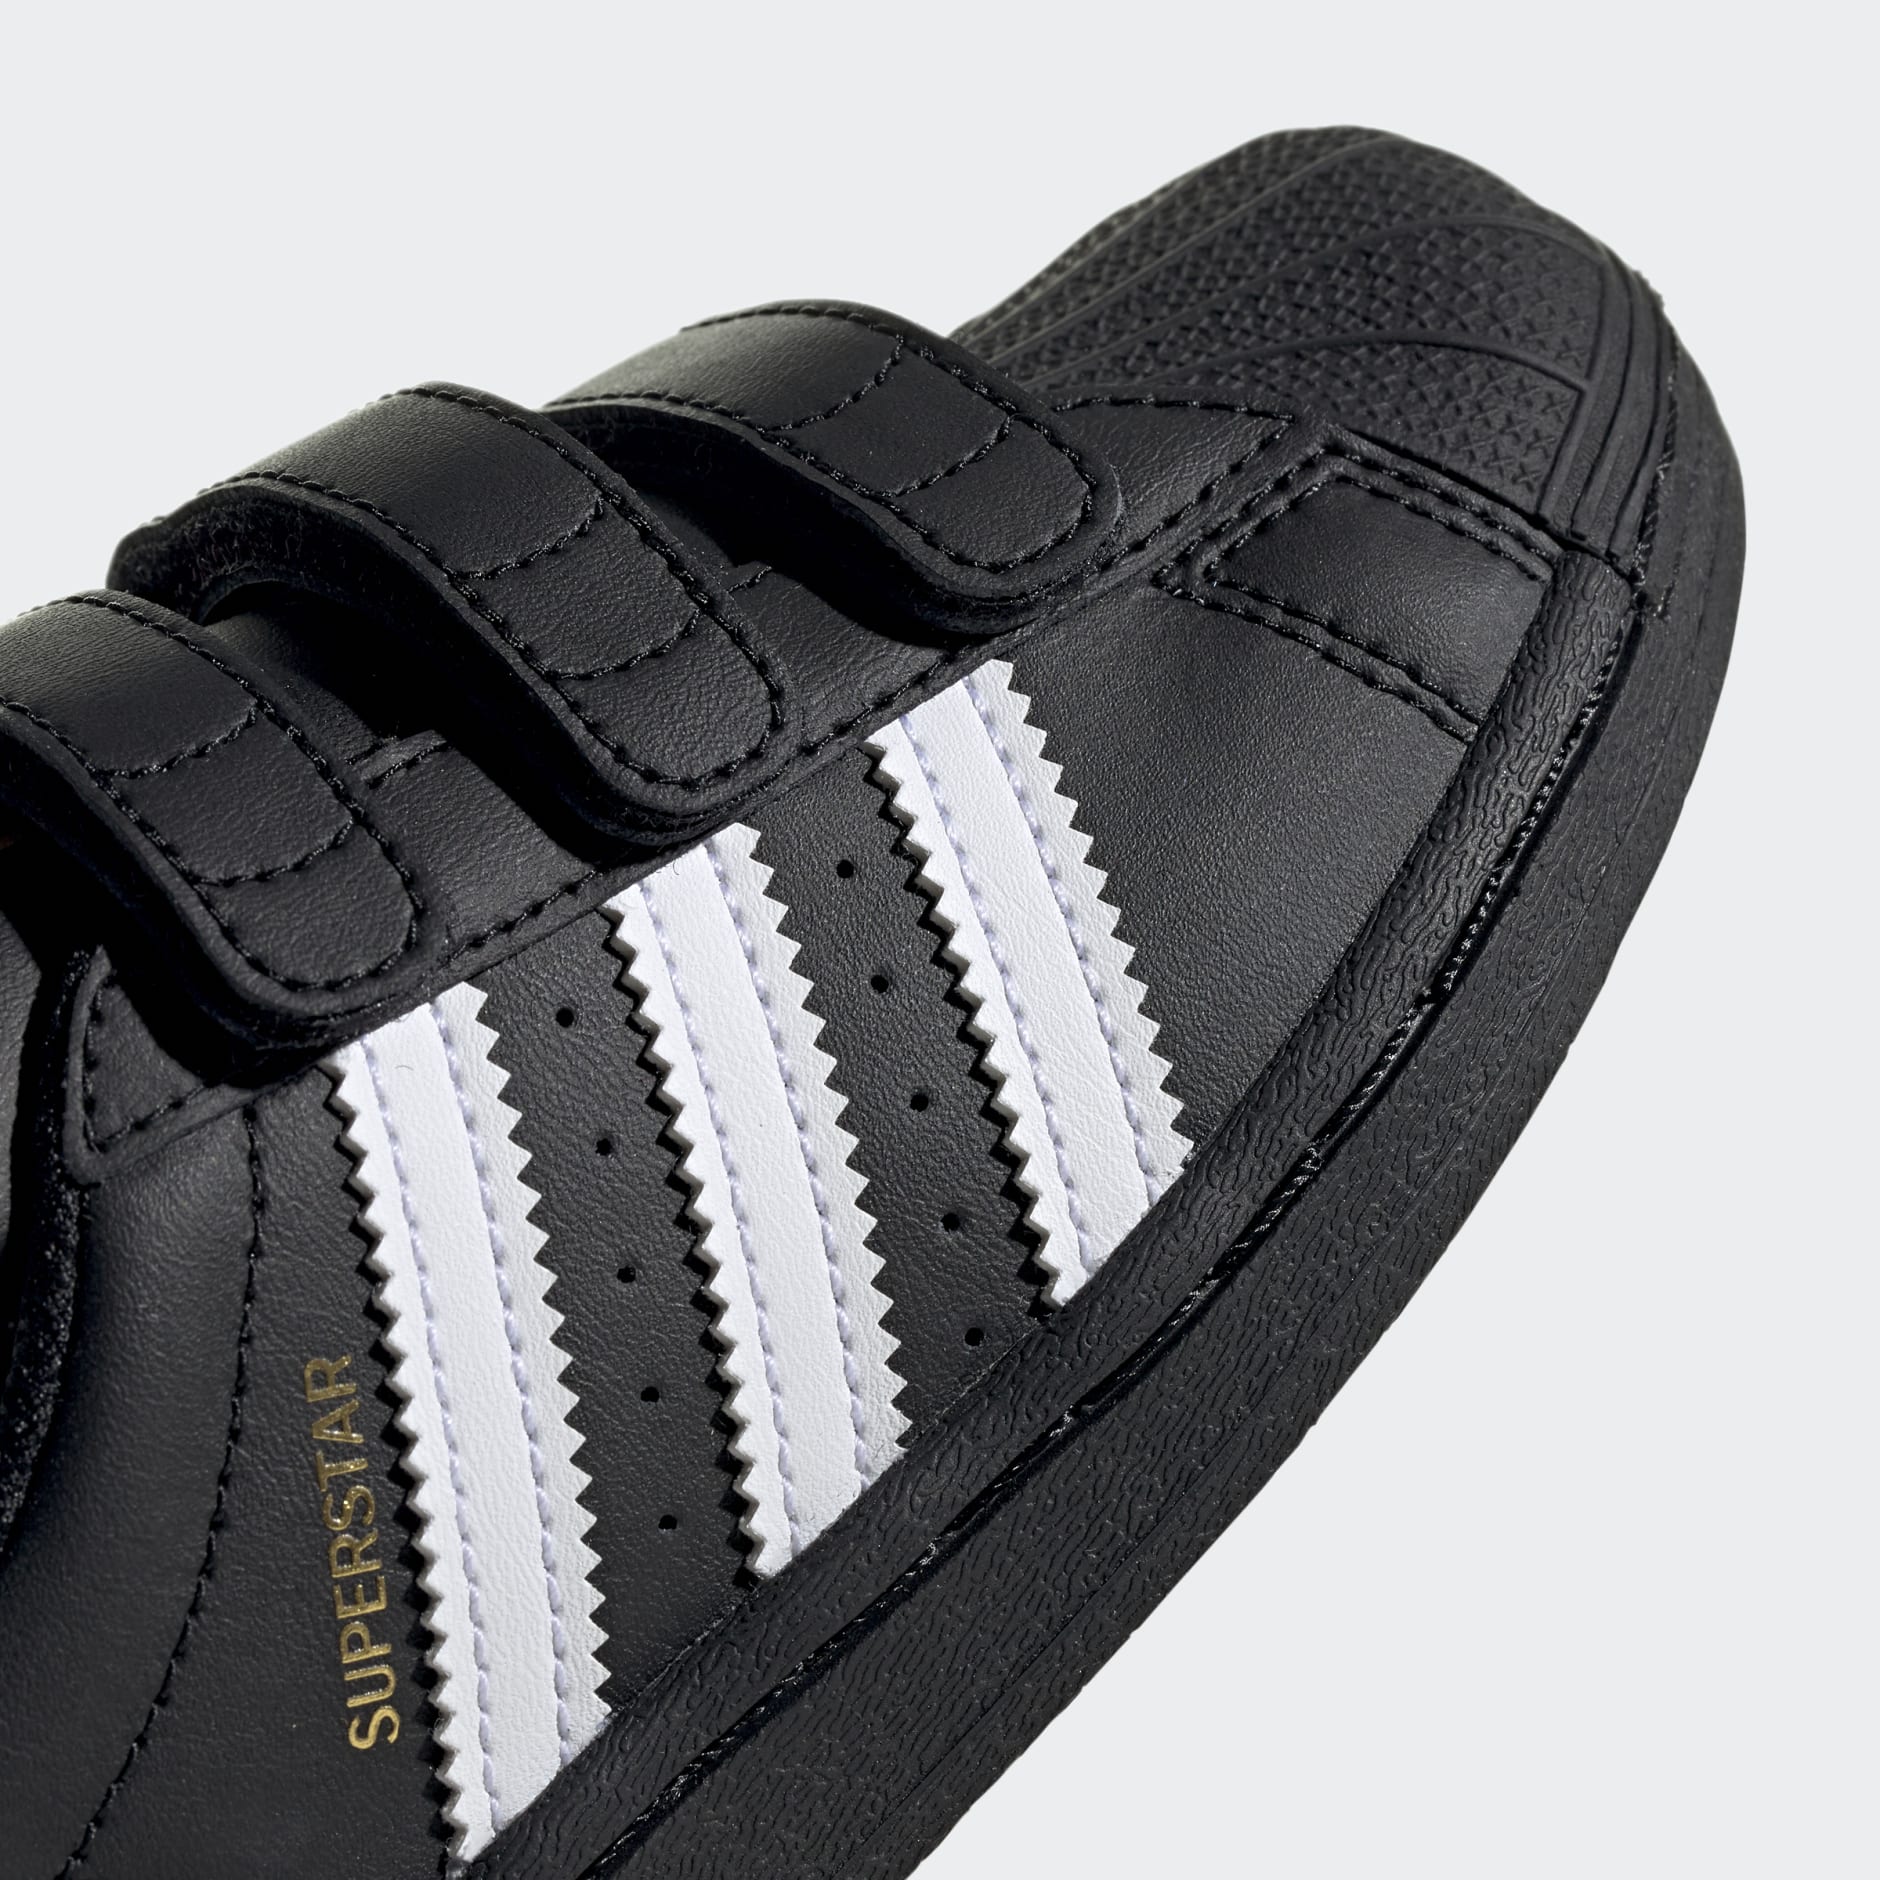 Superstar Shoes - Black | adidas